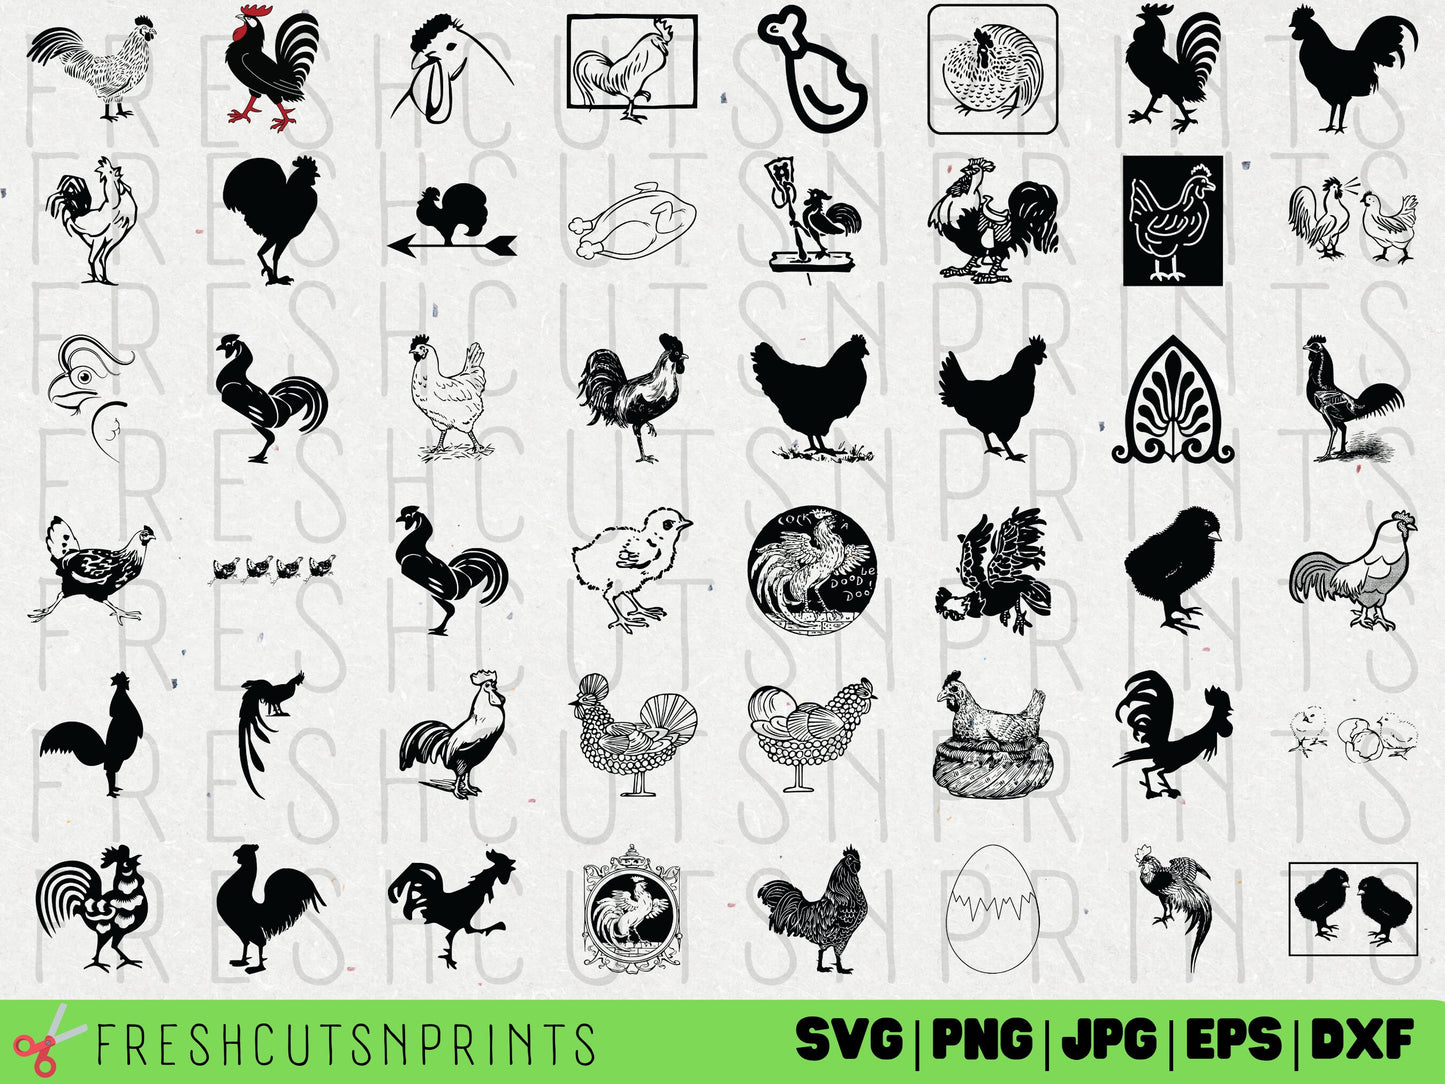 100+ Chicken SVG Bundle, Chicken Clipart, Chicken Vector, Chicken Decal, Chicken Vinyl, Chicken Cut File, Chicken Silhouette, Commercial Use